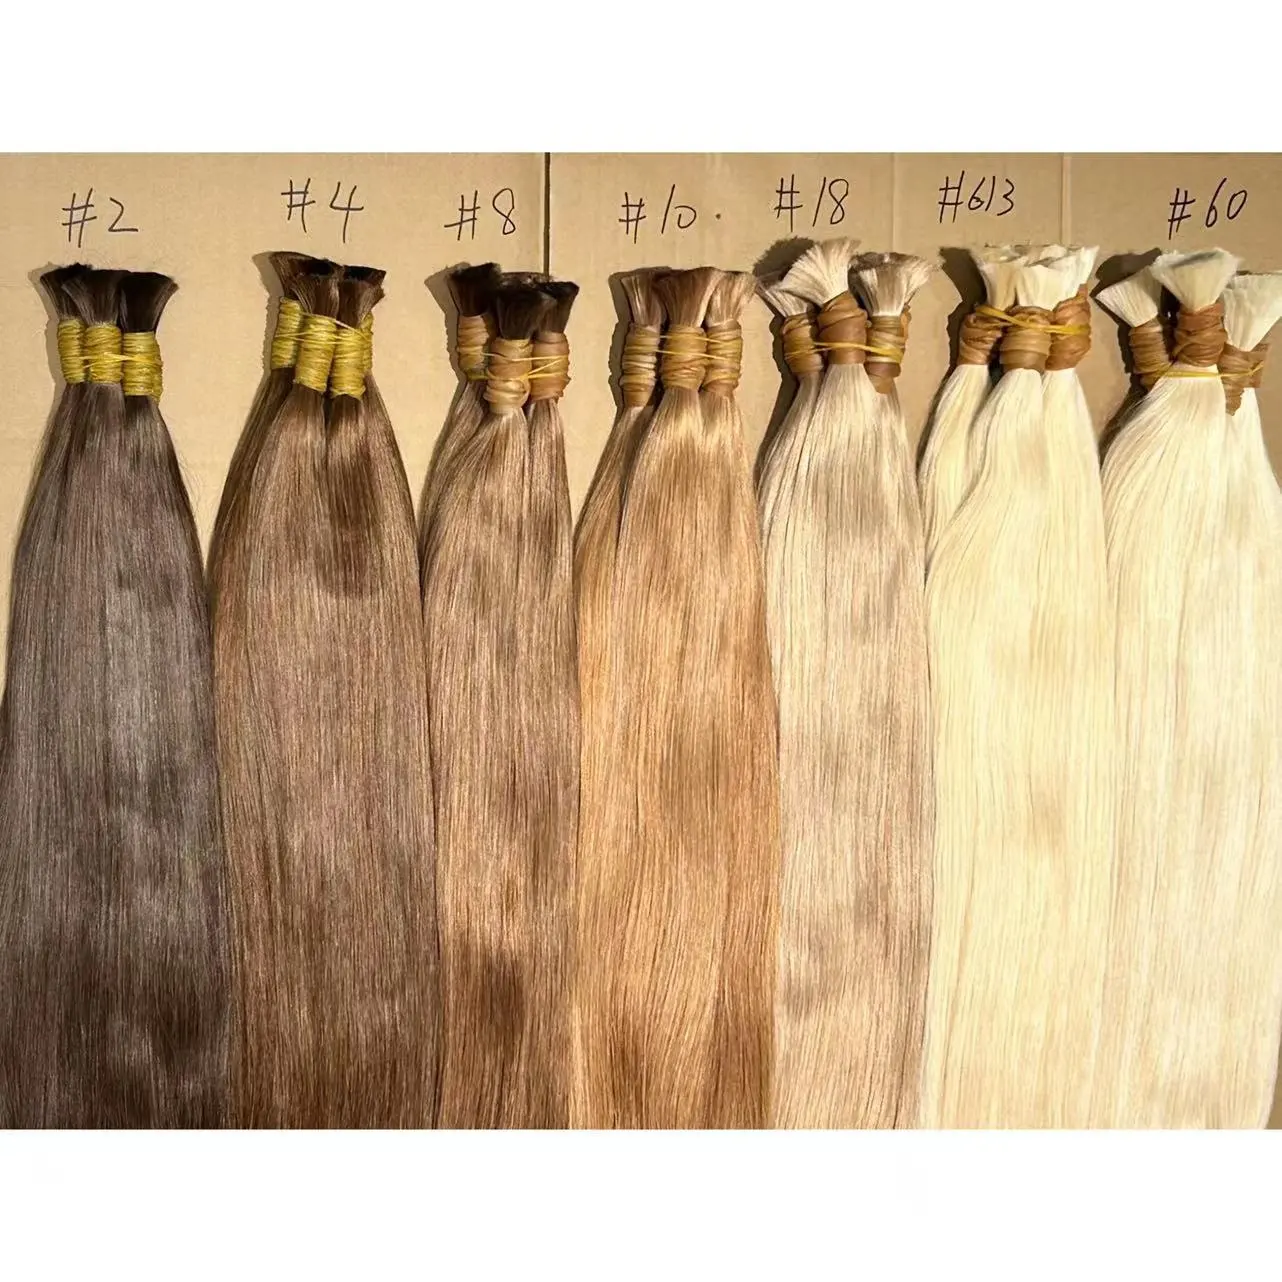 Luxury extensiones cabello natural 100% cabelo humano unprocessed virgin megahair with wholesale price Frete gratis para Brasil